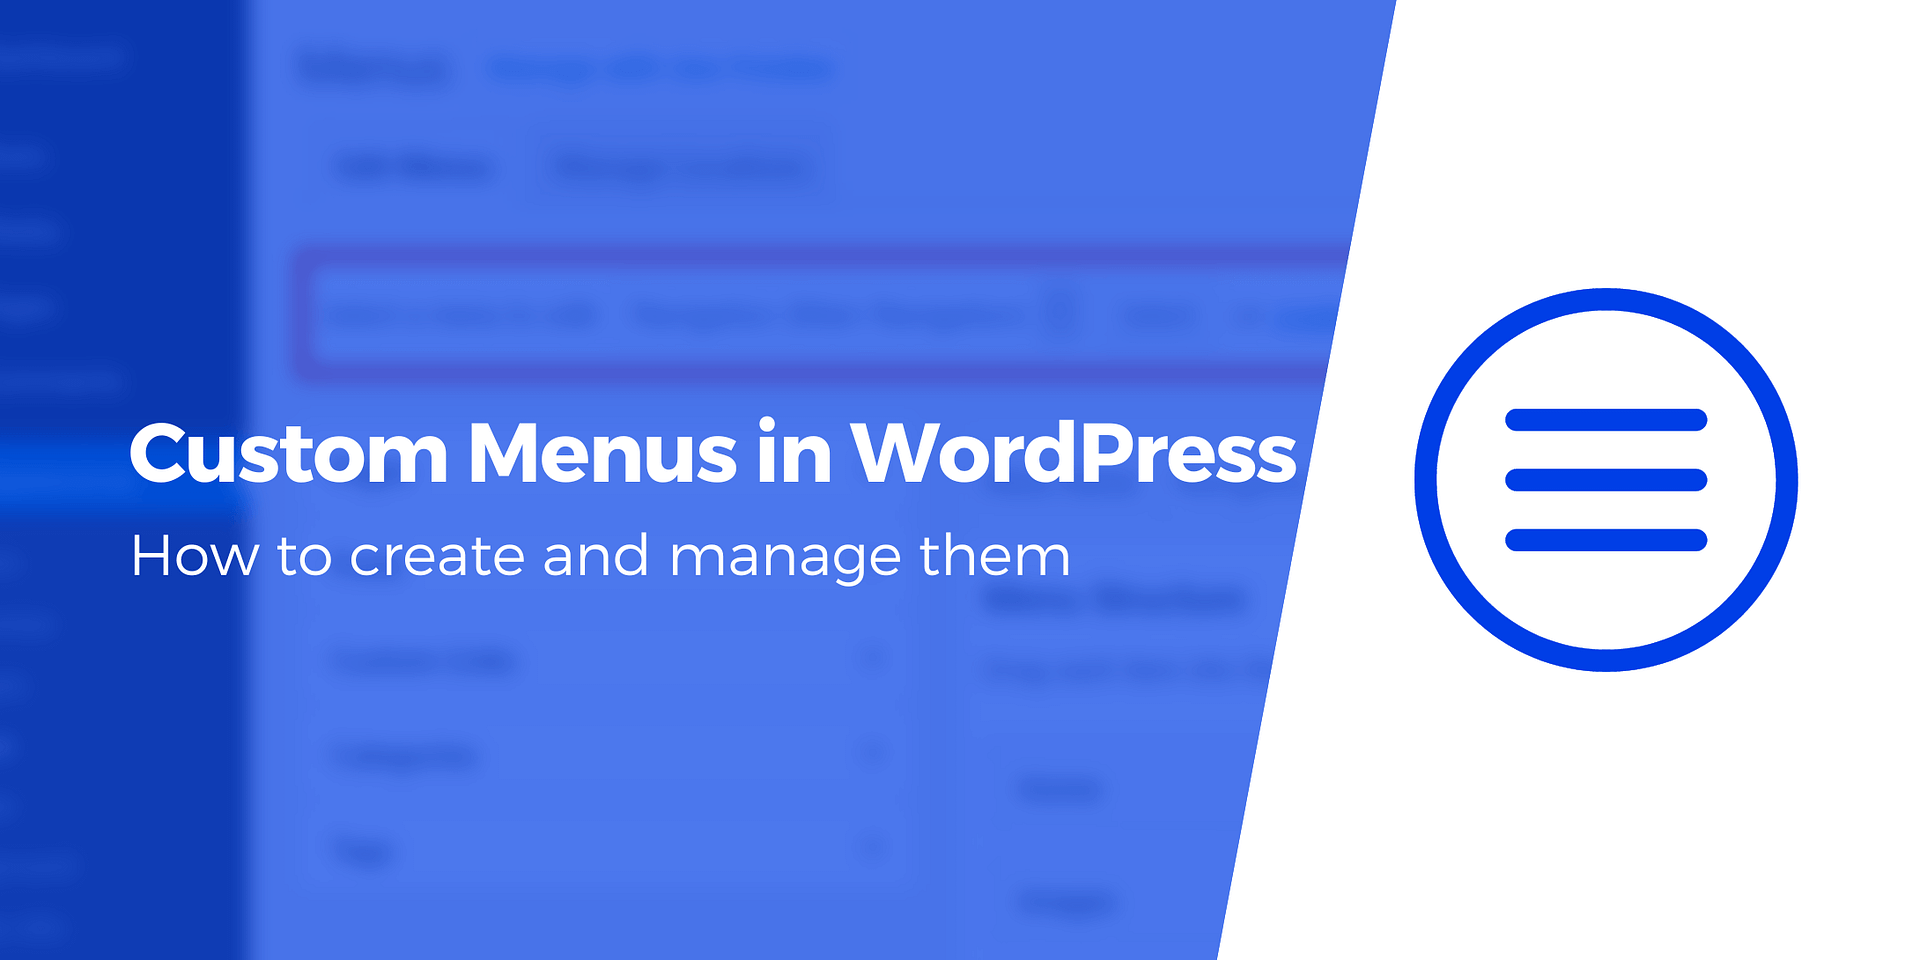 Adding a new WordPress menu item - Easy WP Guide